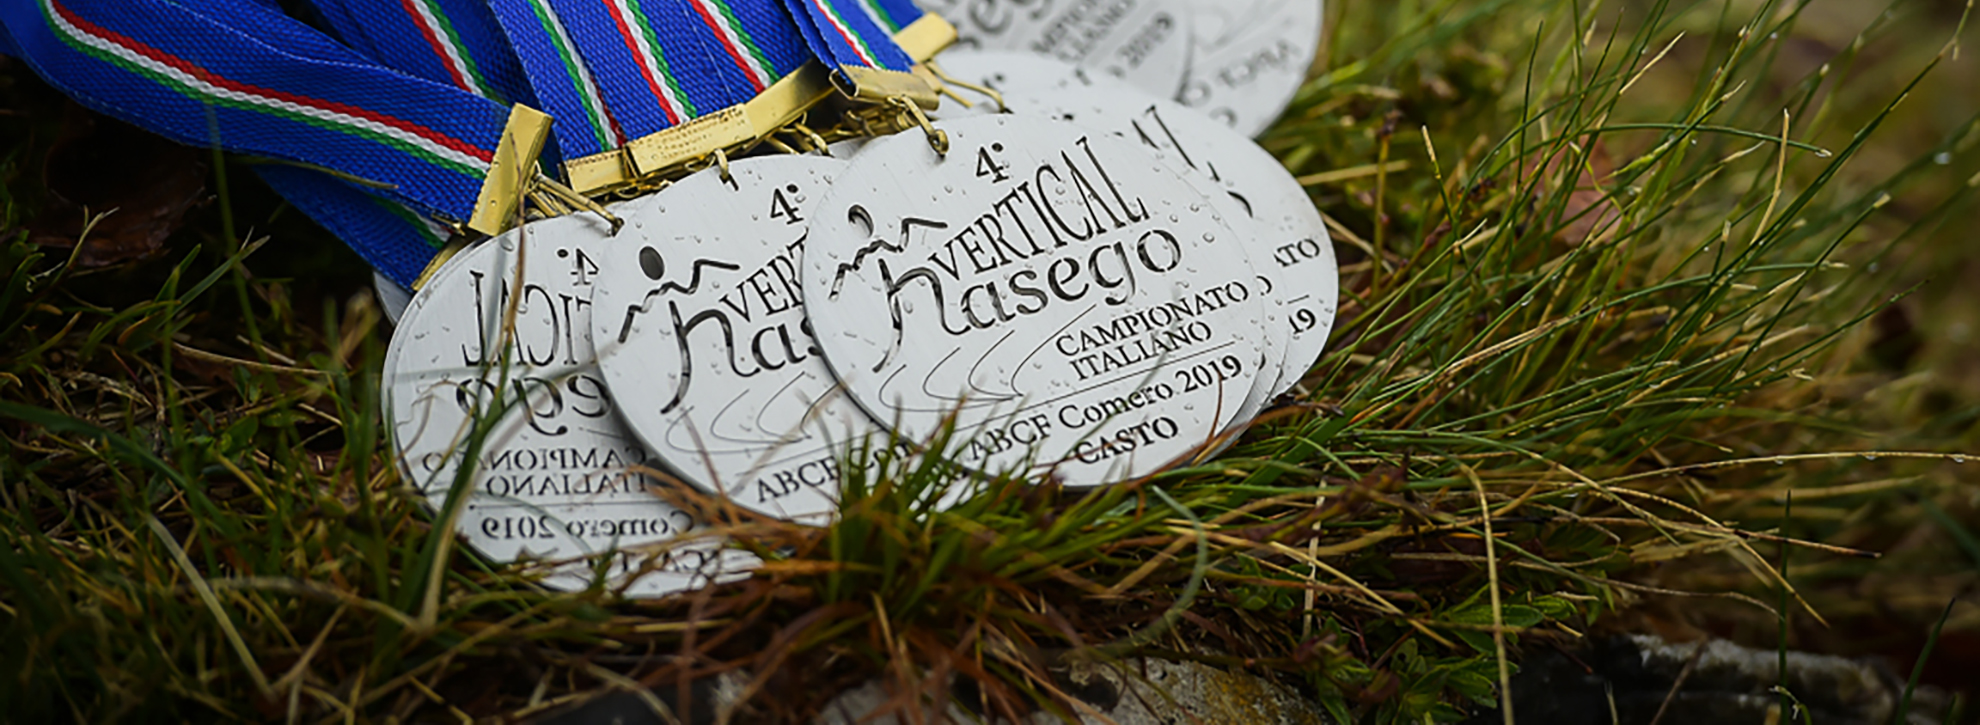 Vertical/ Trofeo Nasego 2019 Italian Mountain Running Championship